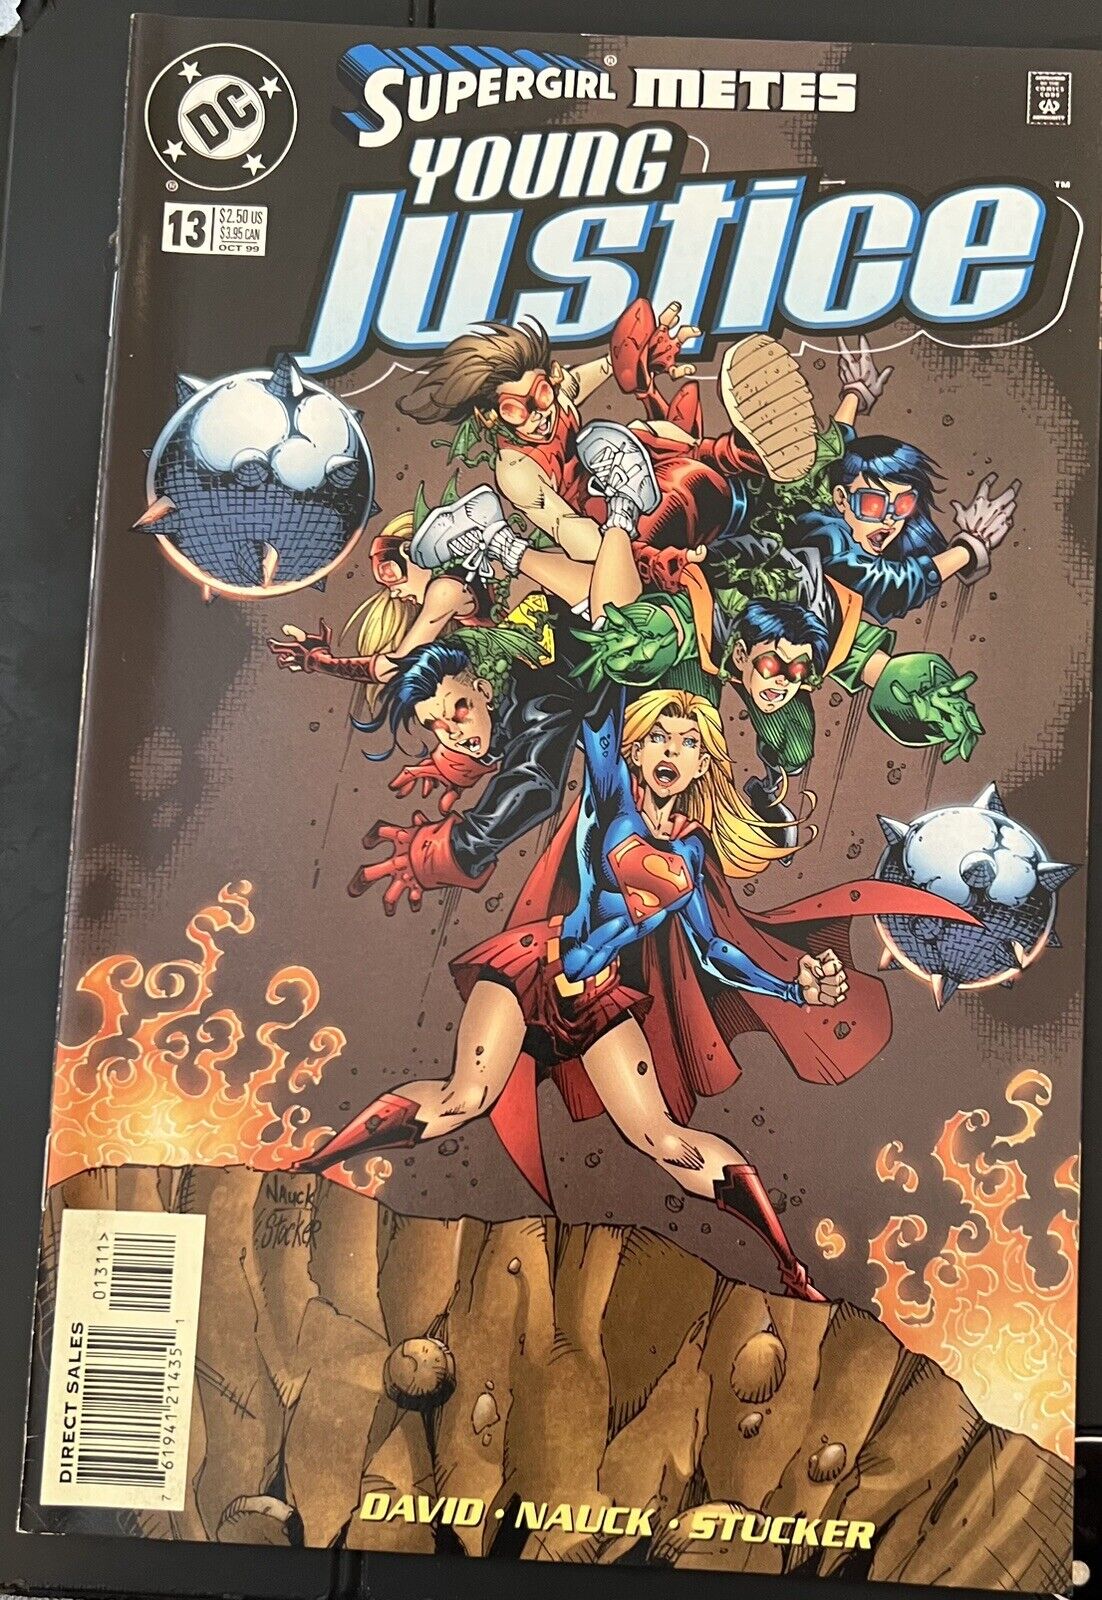 YOUNG JUSTICE #13 * DC Comics * 1999 Comic Book - Supergirl